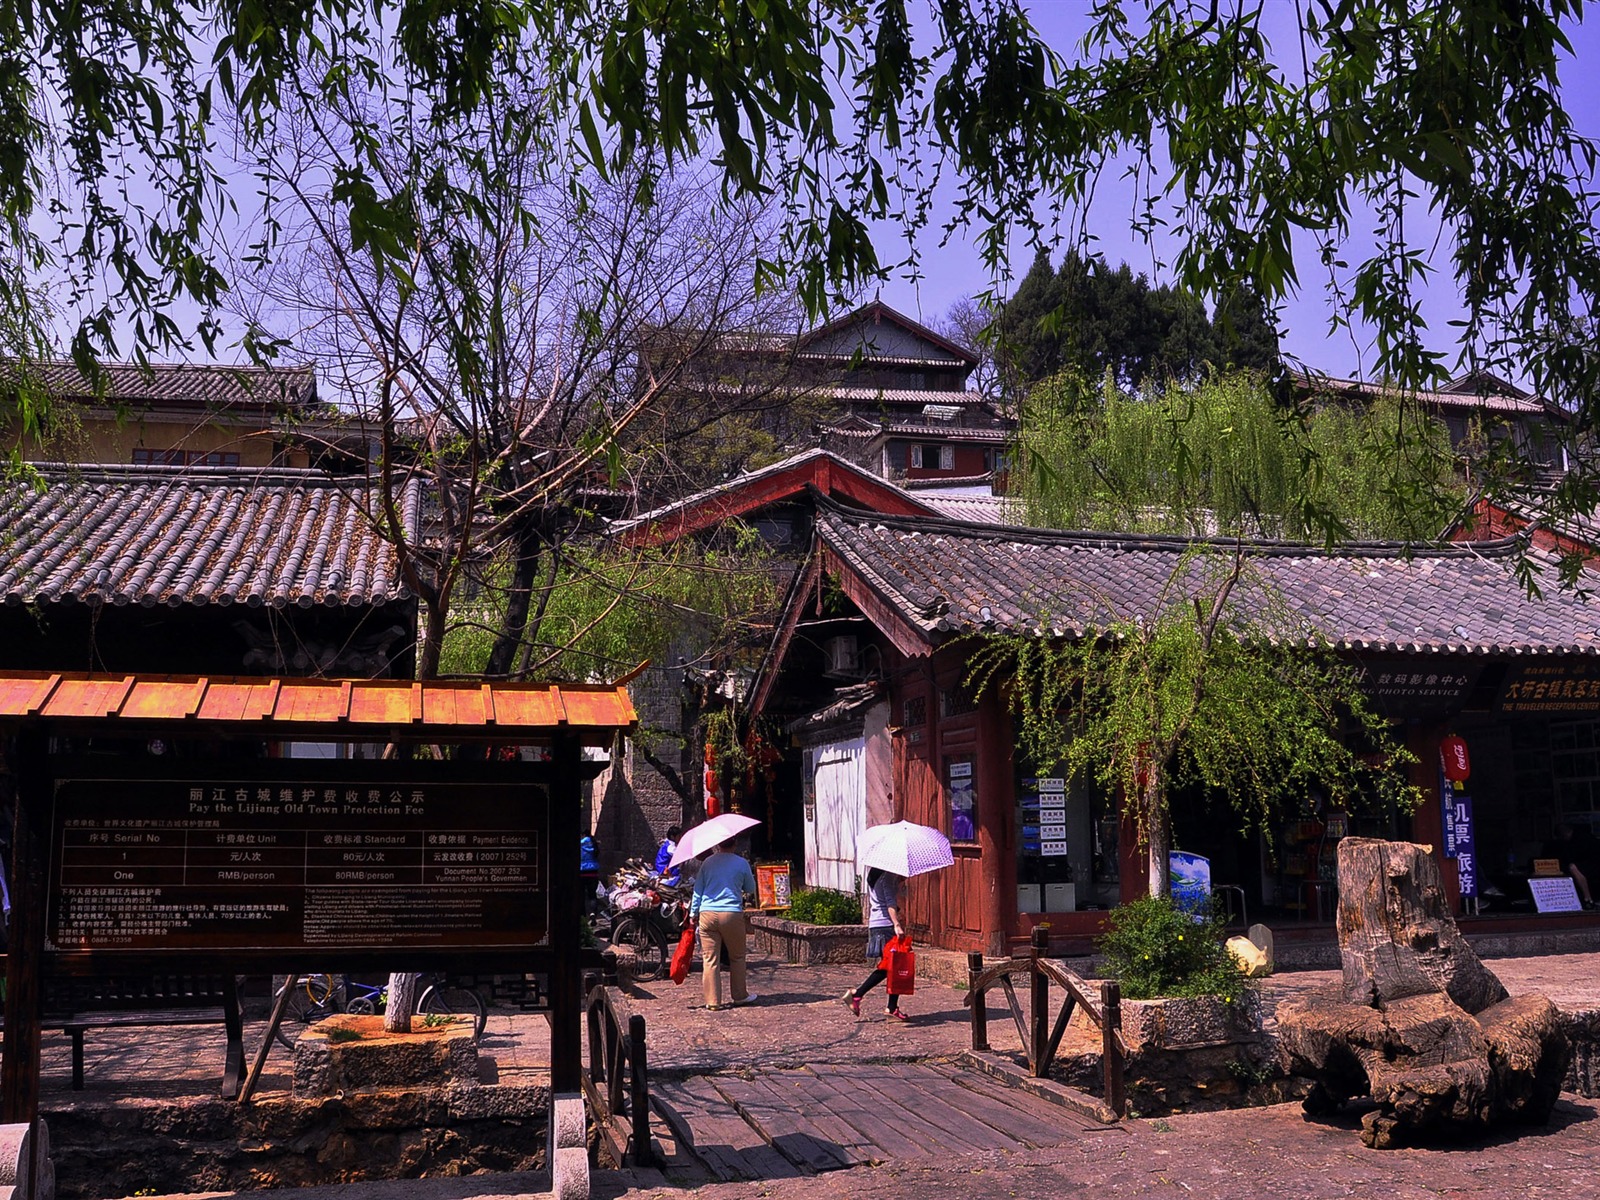 Lijiang ancient town atmosphere (2) (old Hong OK works) #26 - 1600x1200